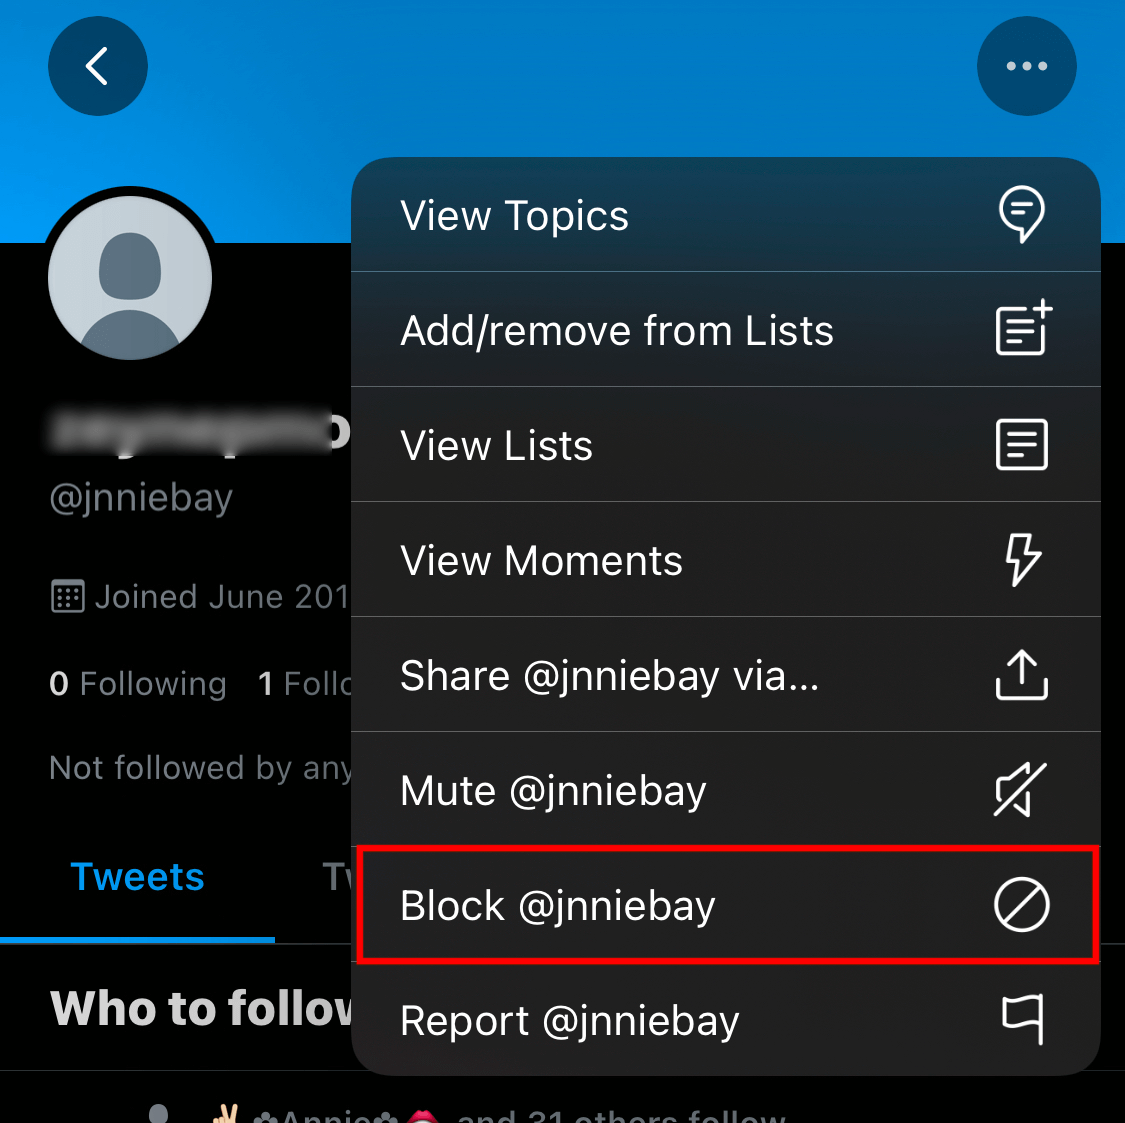 Block @...